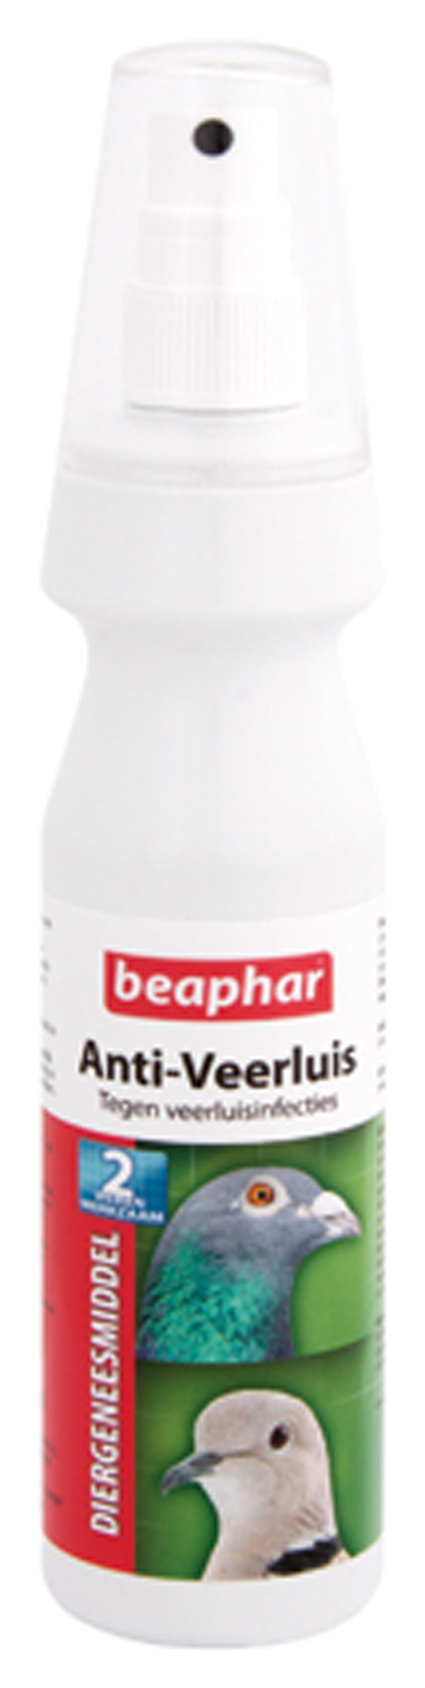 Beaphar Anti-Veerluis 150 ml 